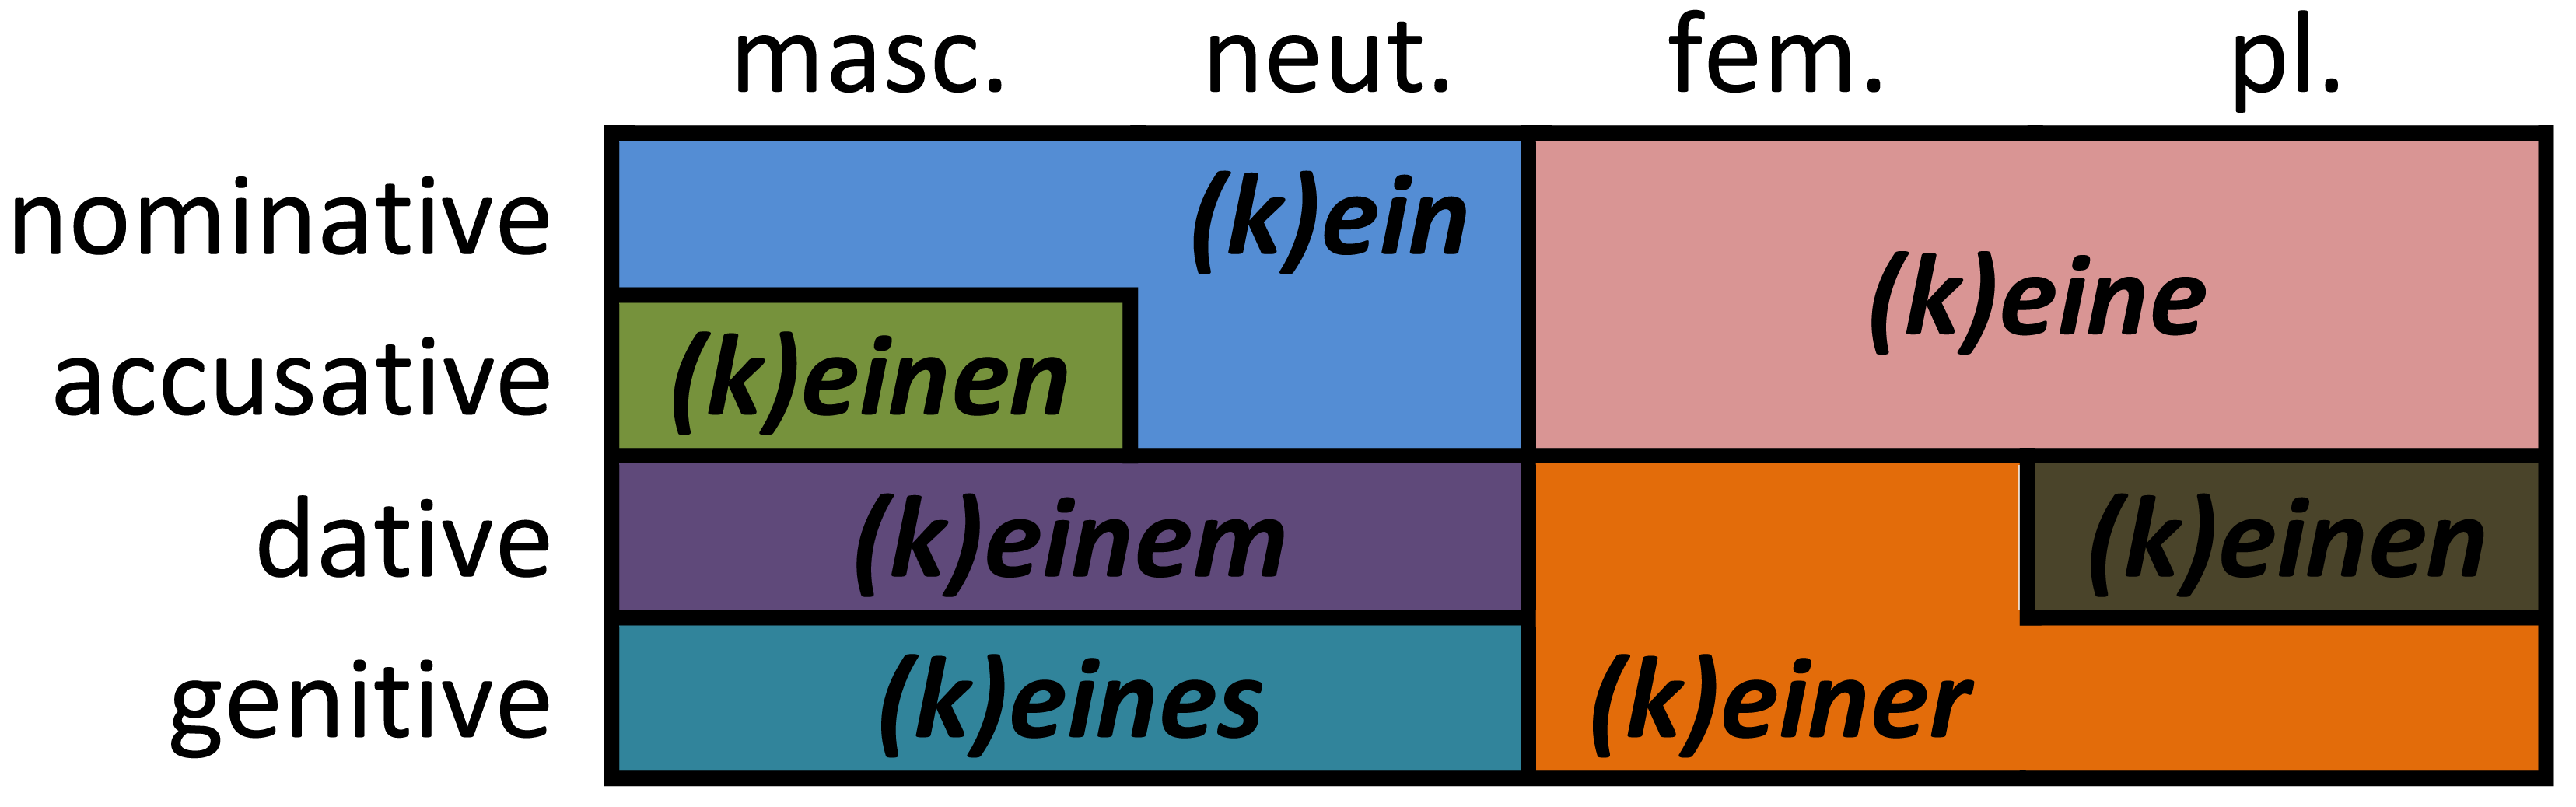 German Declension Chart